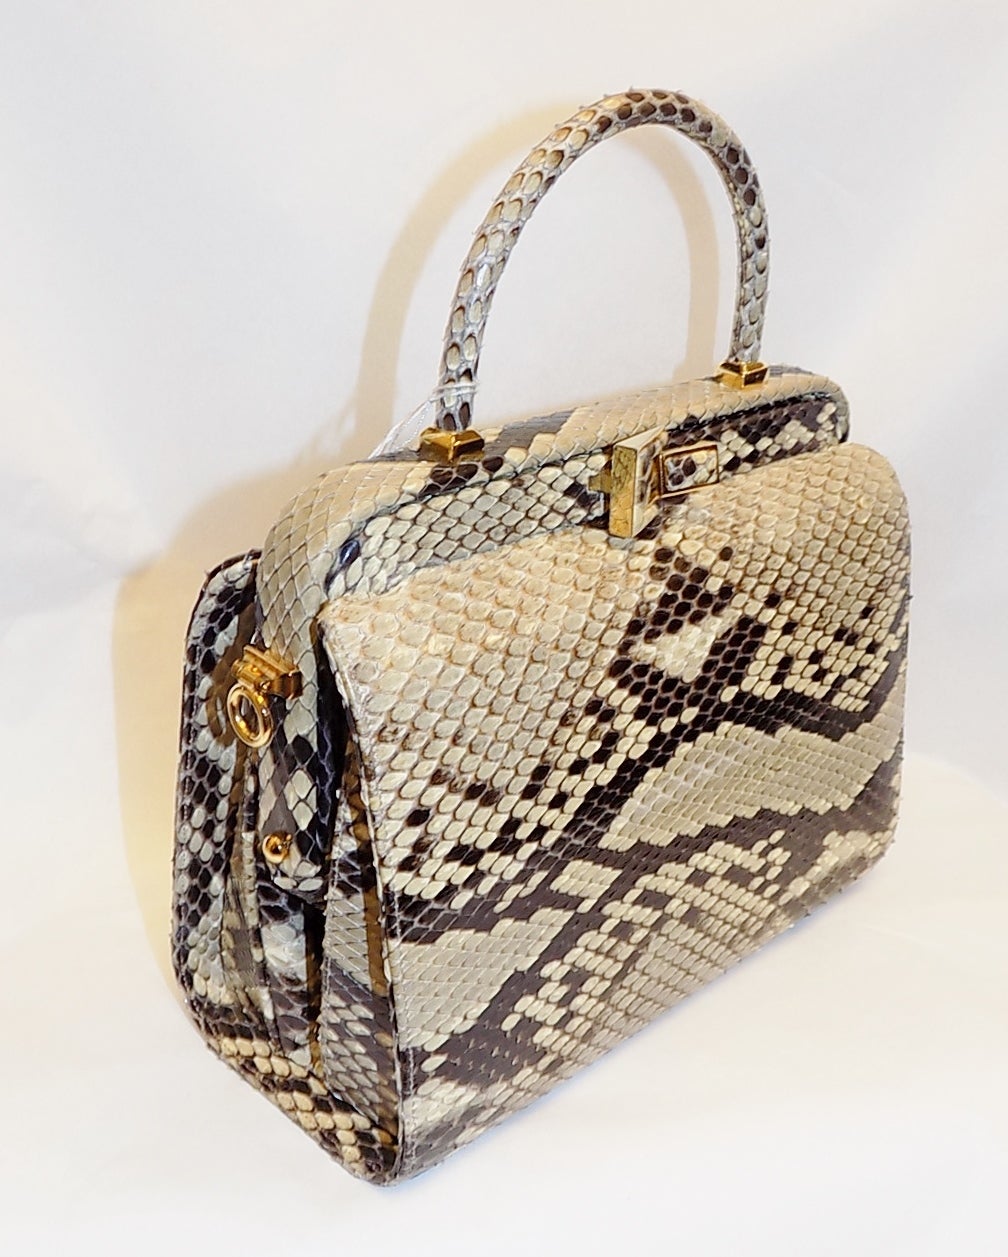 Never used spectacular Judith Leiber hard case  Python Skin bag. Gold tone frame. 40